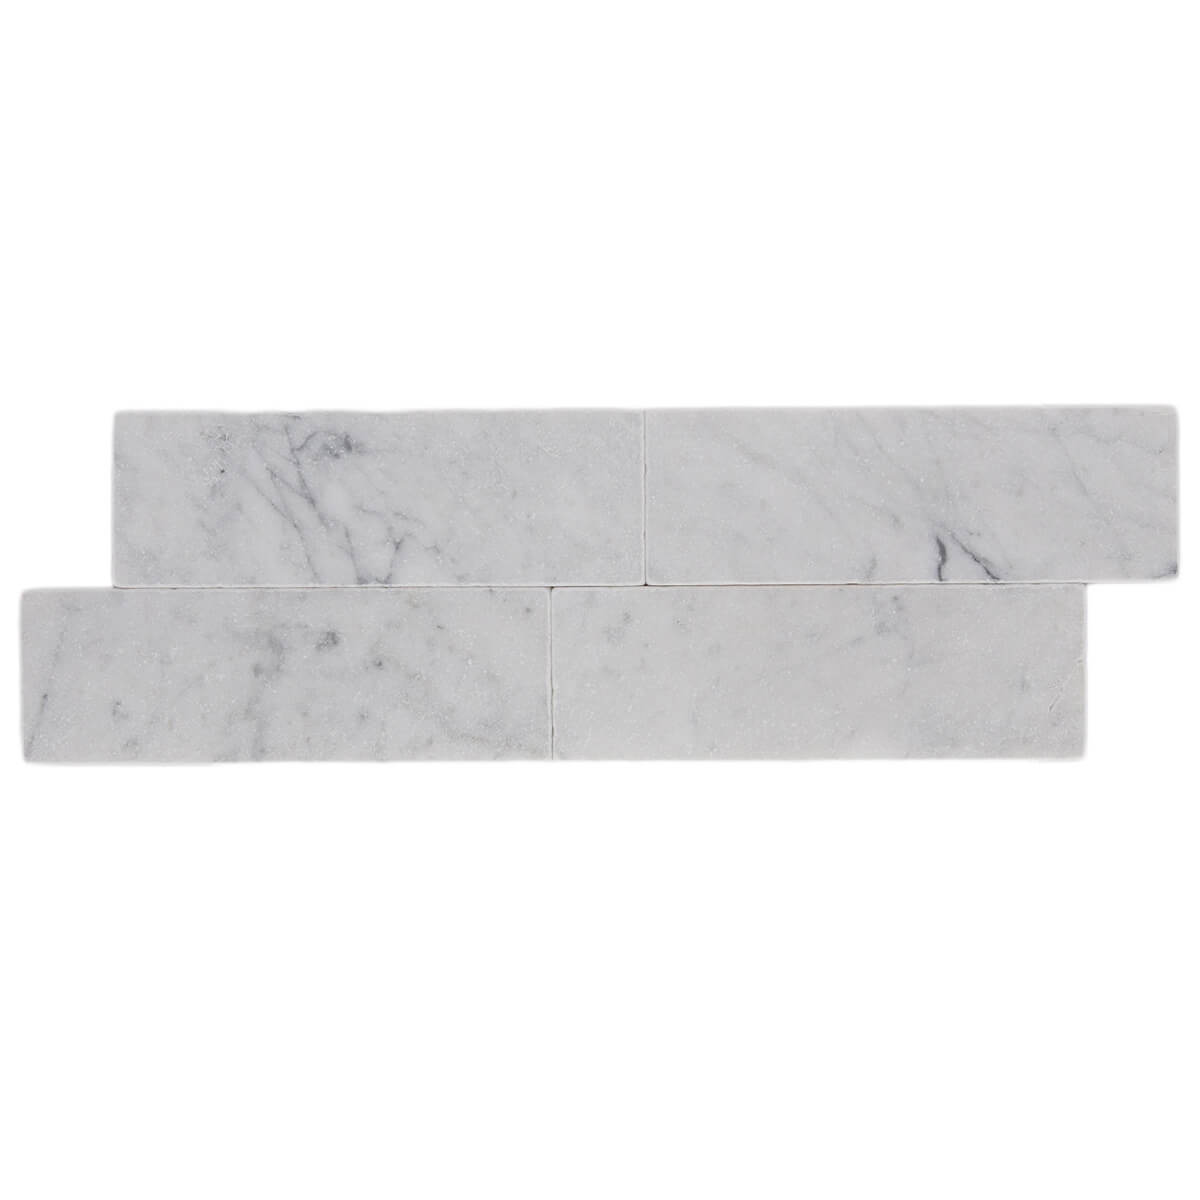 Carrara Bianco field tile - high-quality marble tumbled stone tile with worn edge, 3x9x0.375 inches